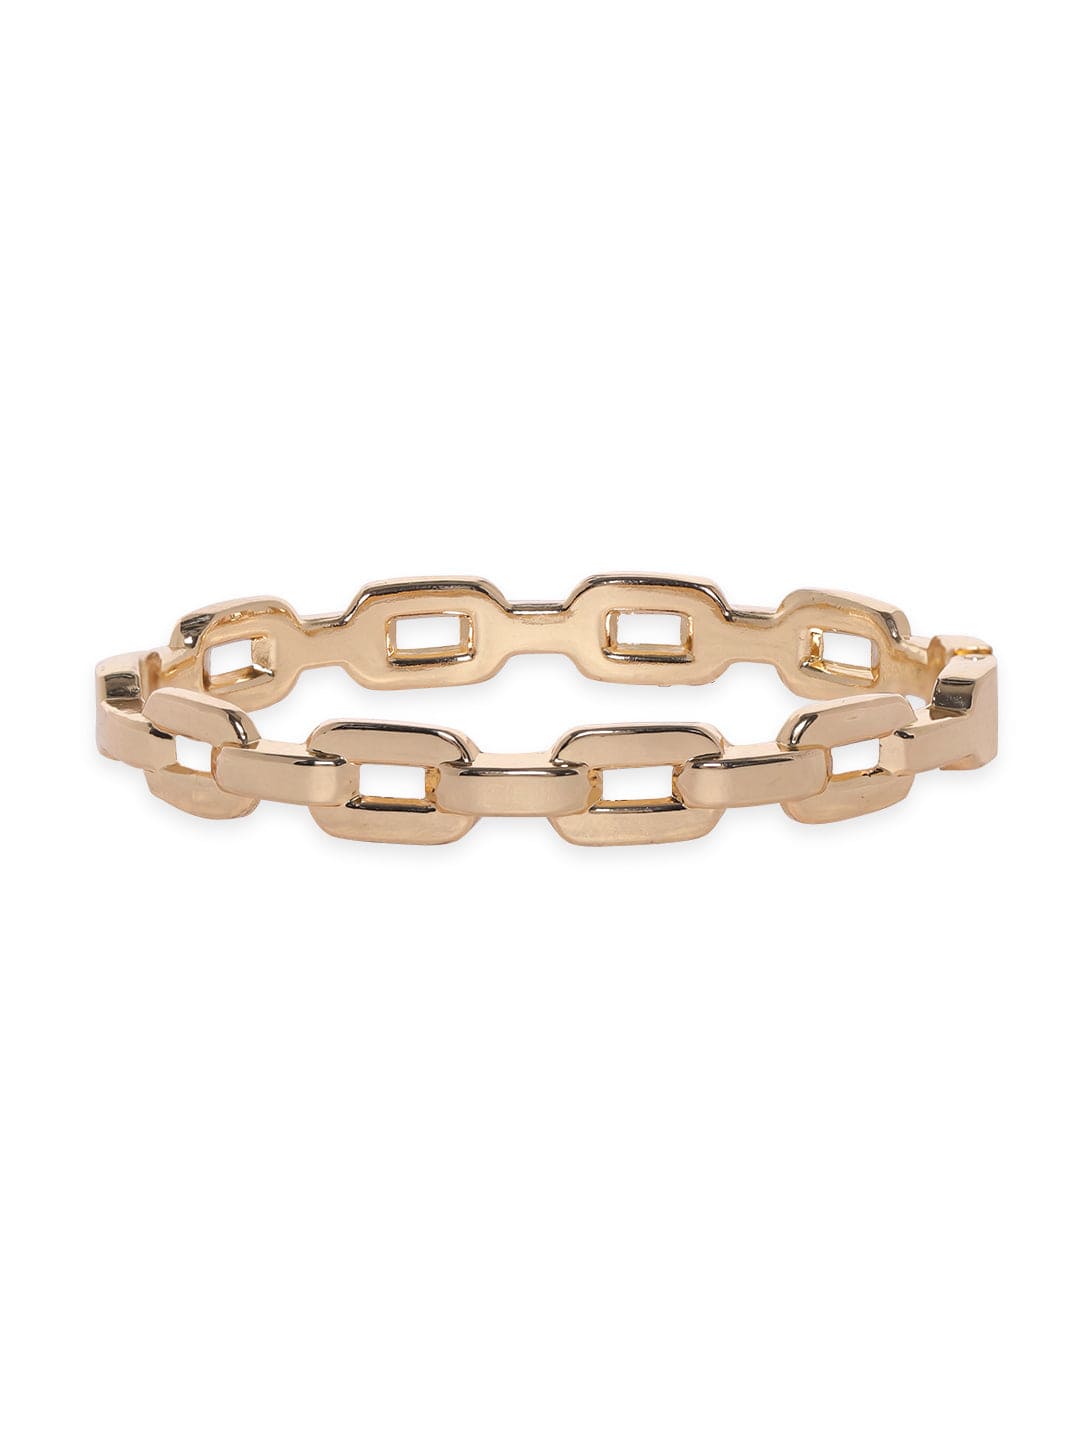 The Chain Link Bracelet - Rose Gold | Vincero Watches | Vincero Collective